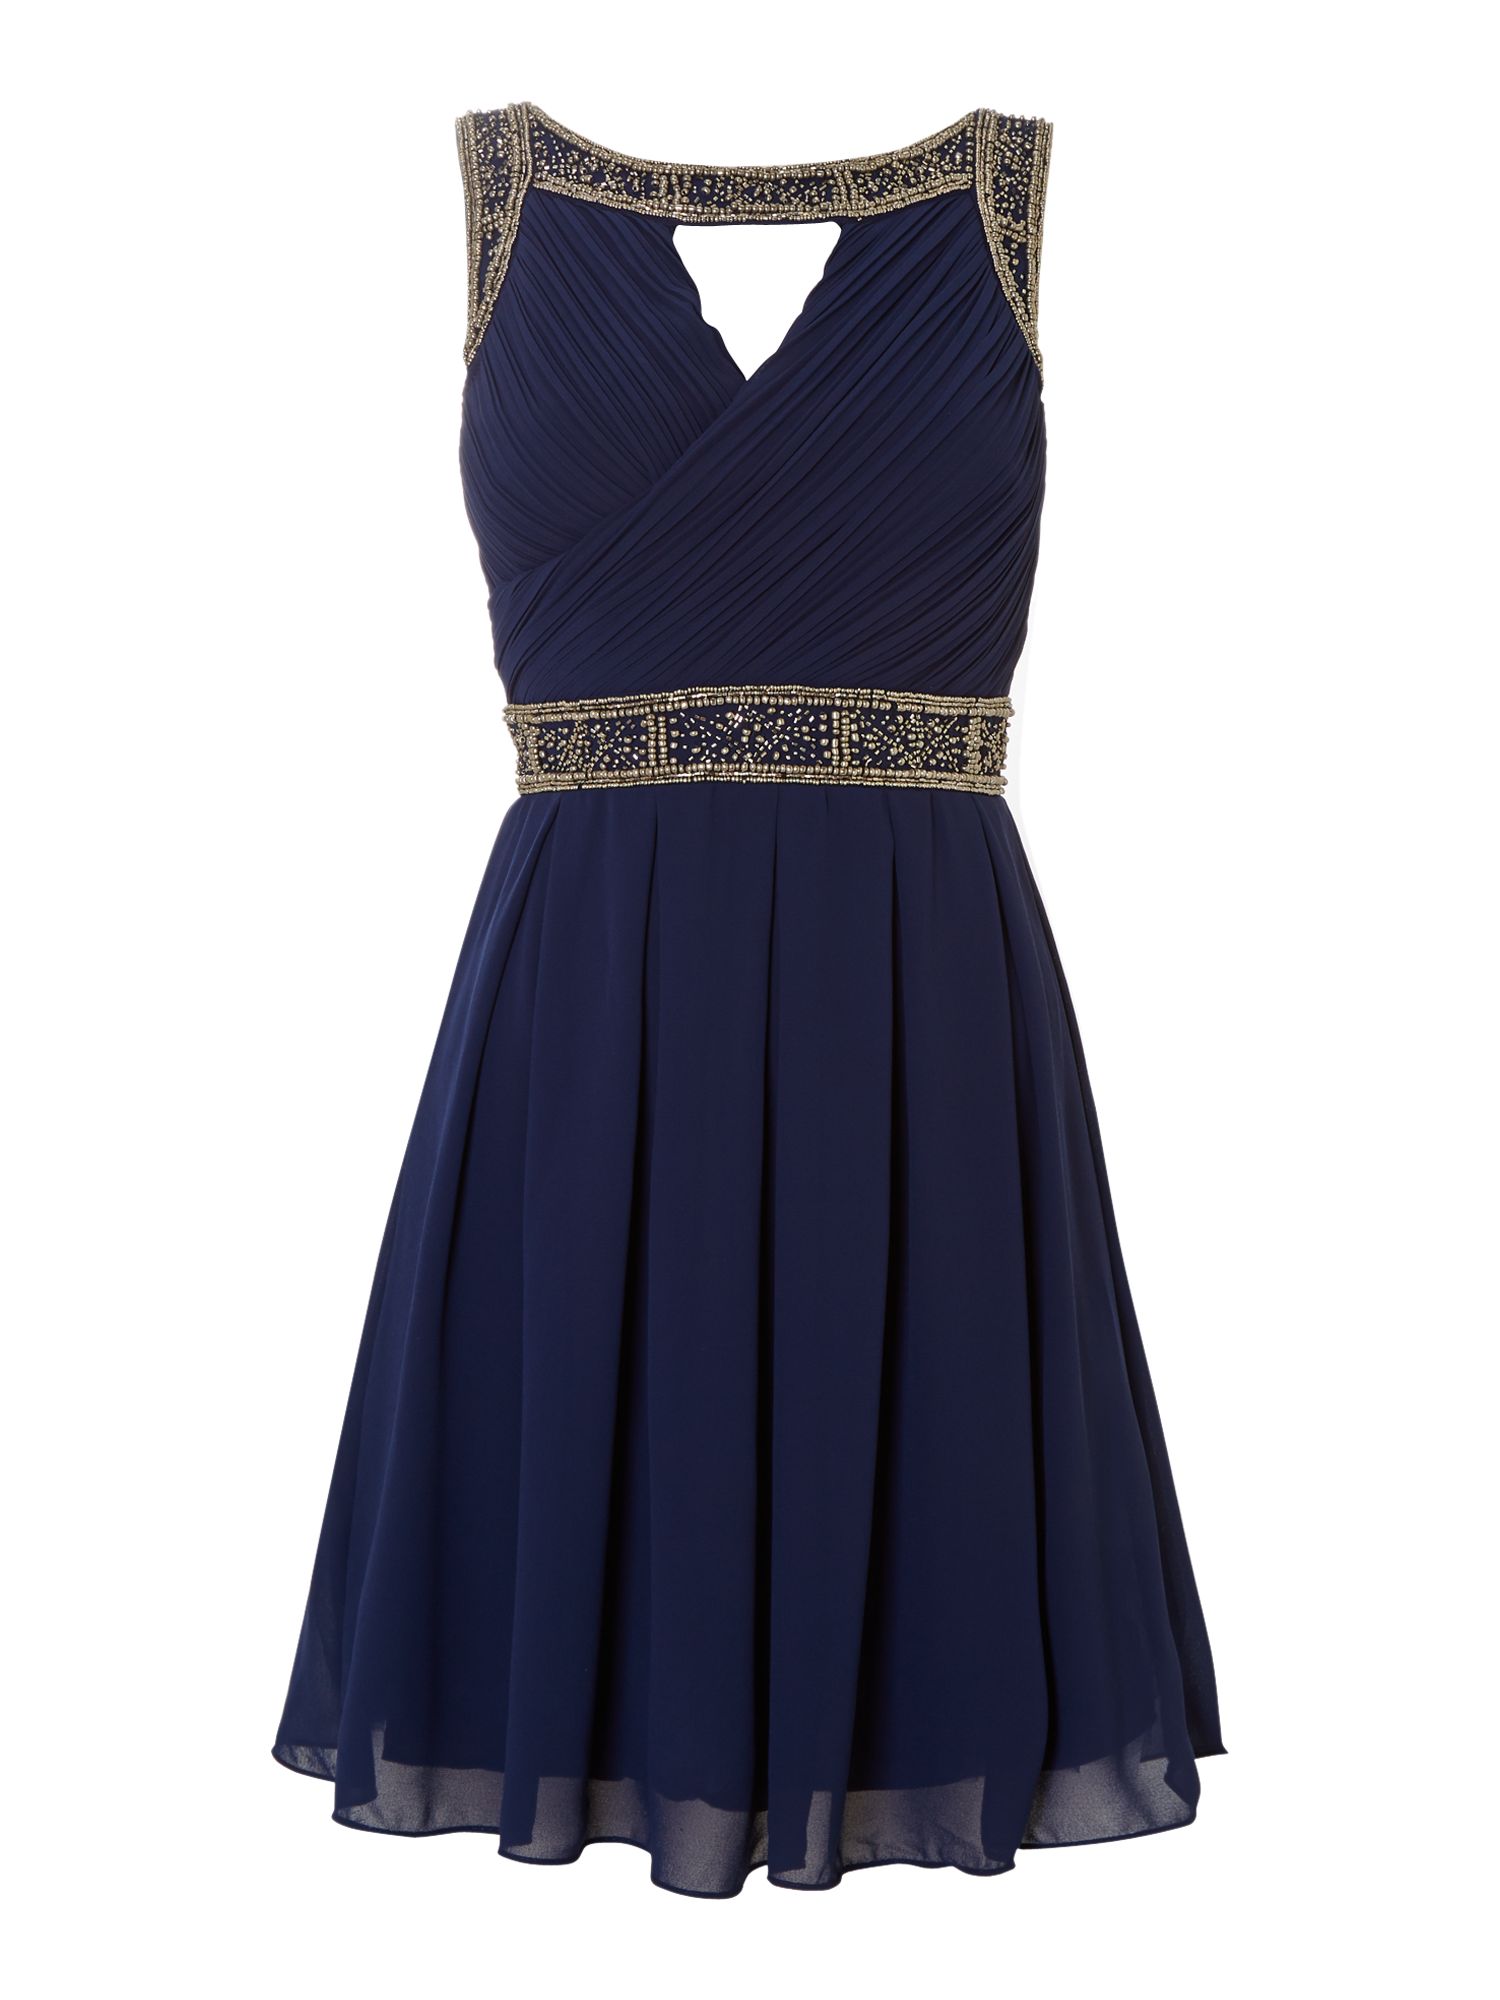 Tfnc london Embellished Strap Dress in Blue | Lyst